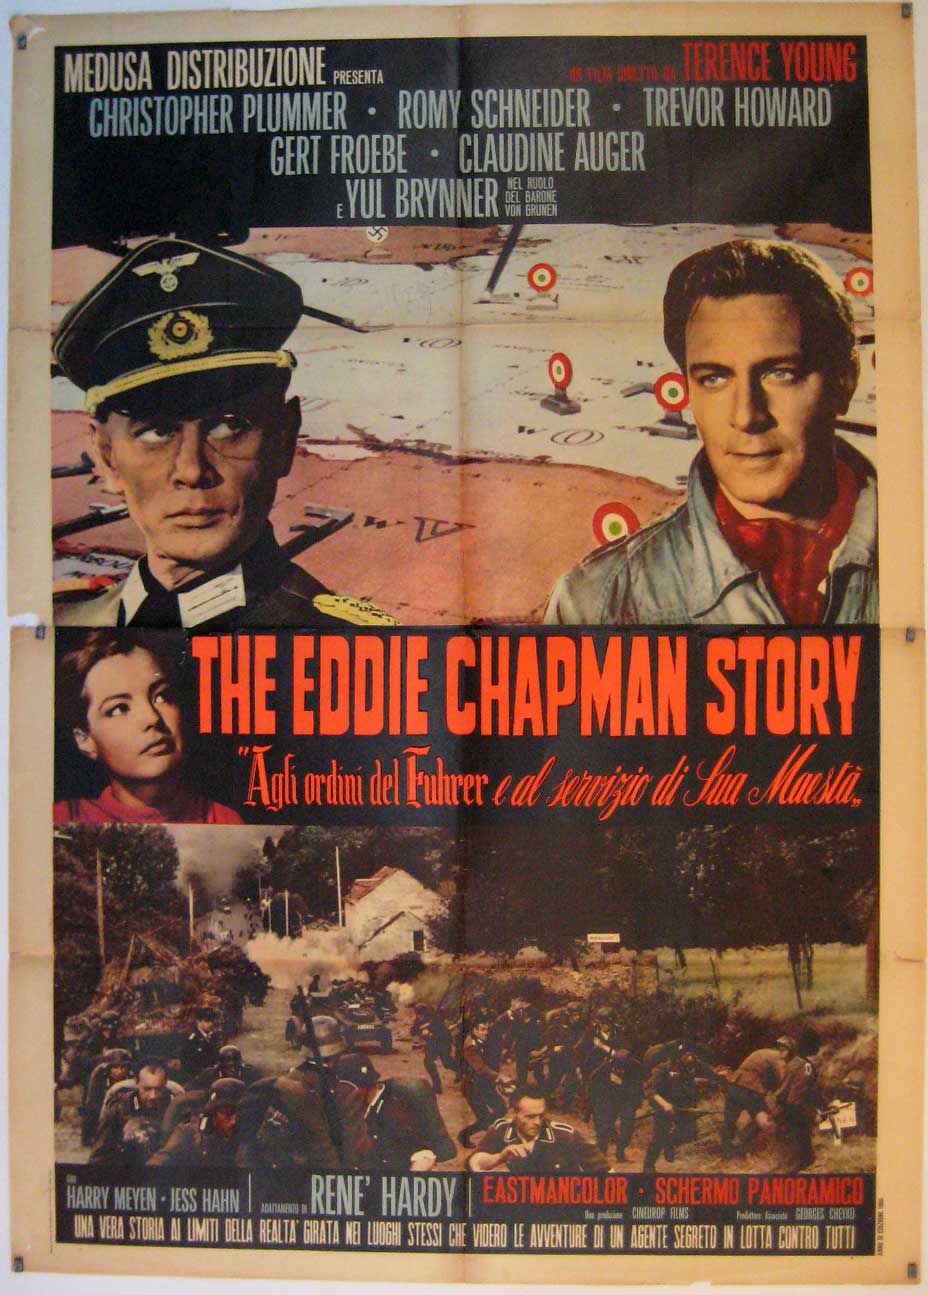 THE EDDIE CHAPMAN STORY